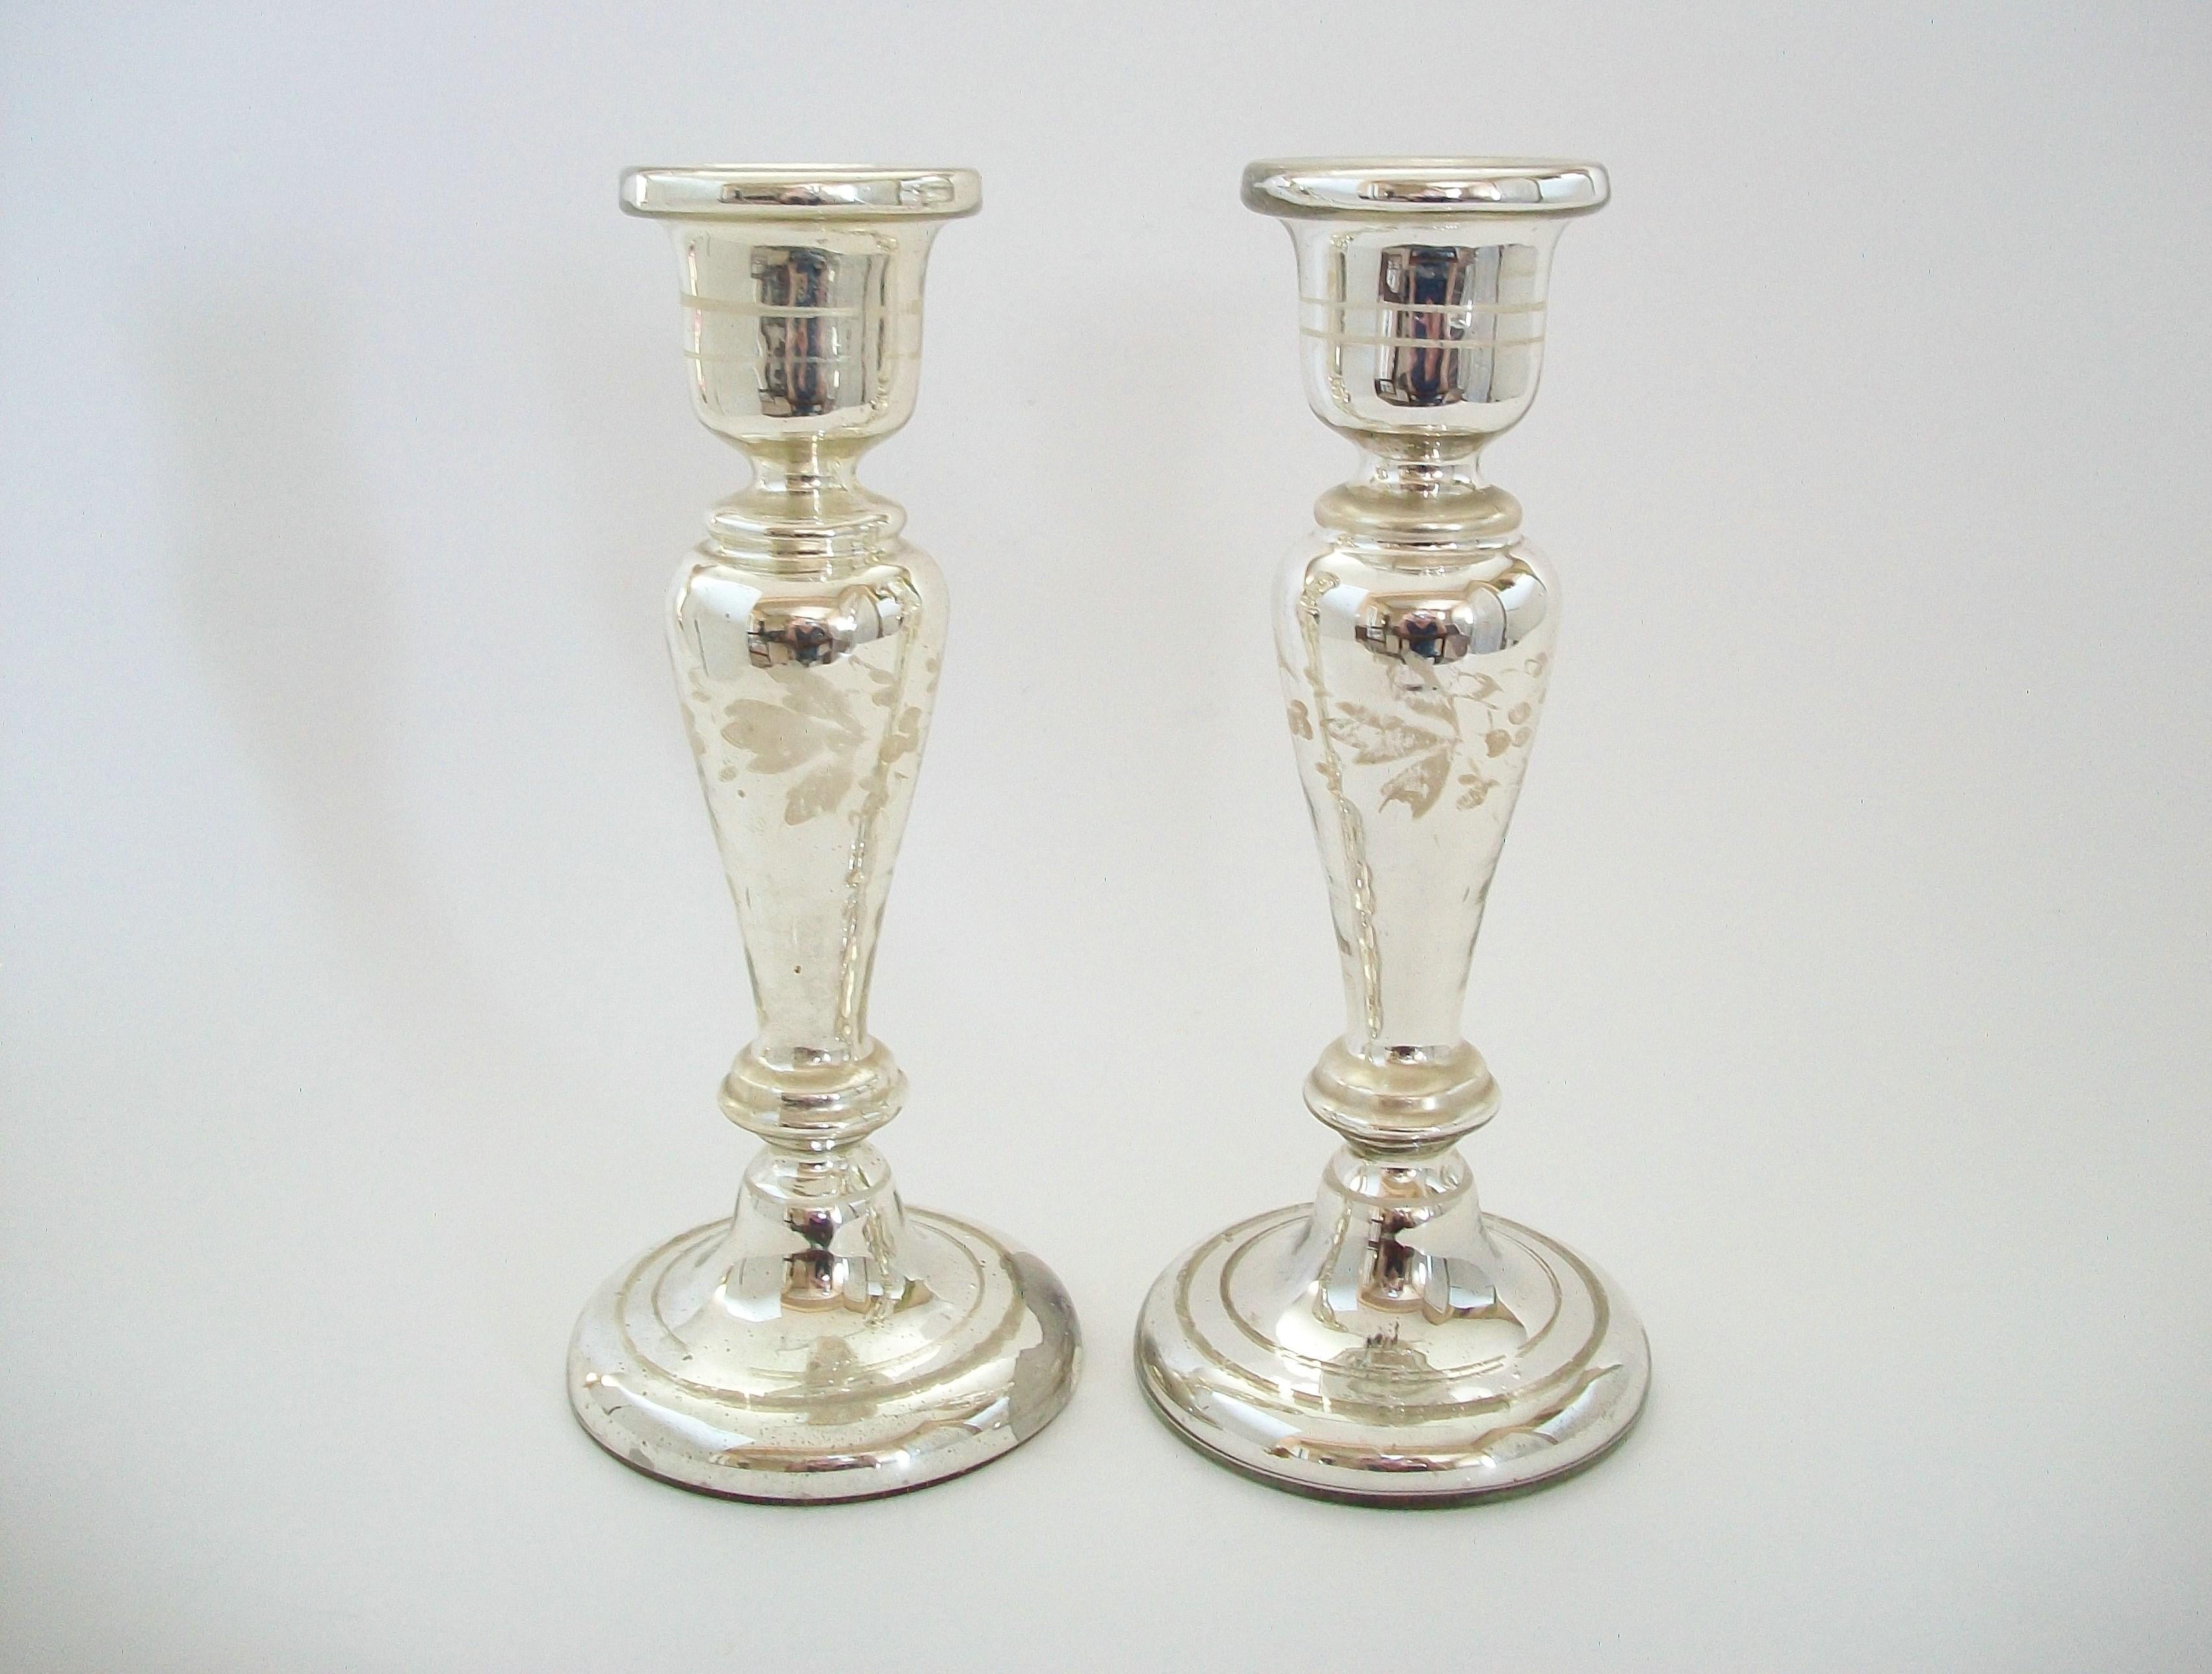 Belle Époque Antique Pair of White Painted Mercury Glass Candlesticks - France - Circa 1880 For Sale